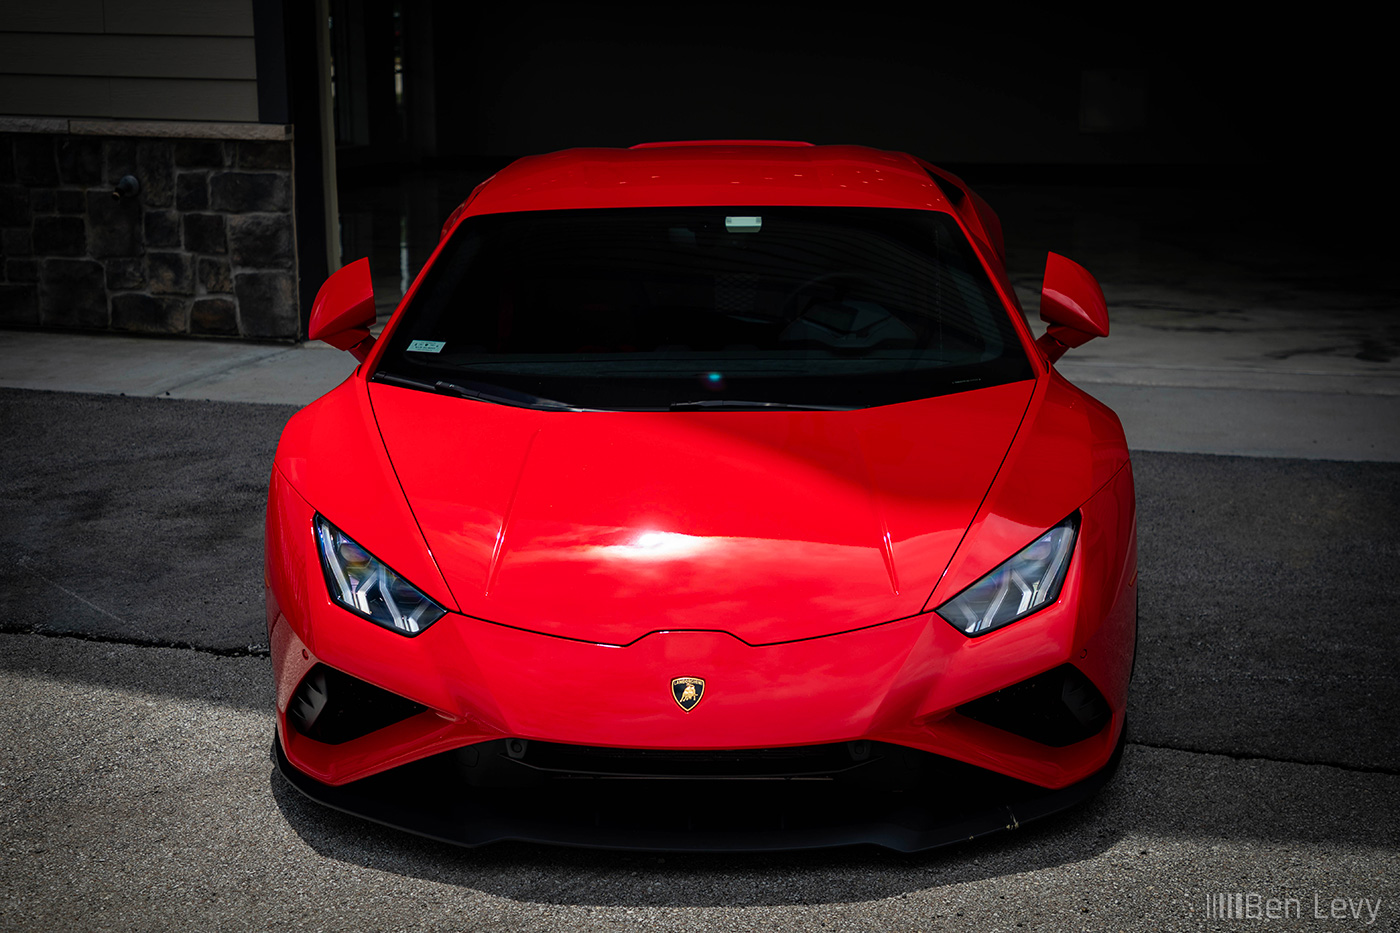 Front of Red Lamborghini Huracan at Iron Gate Motor Condos Car Show